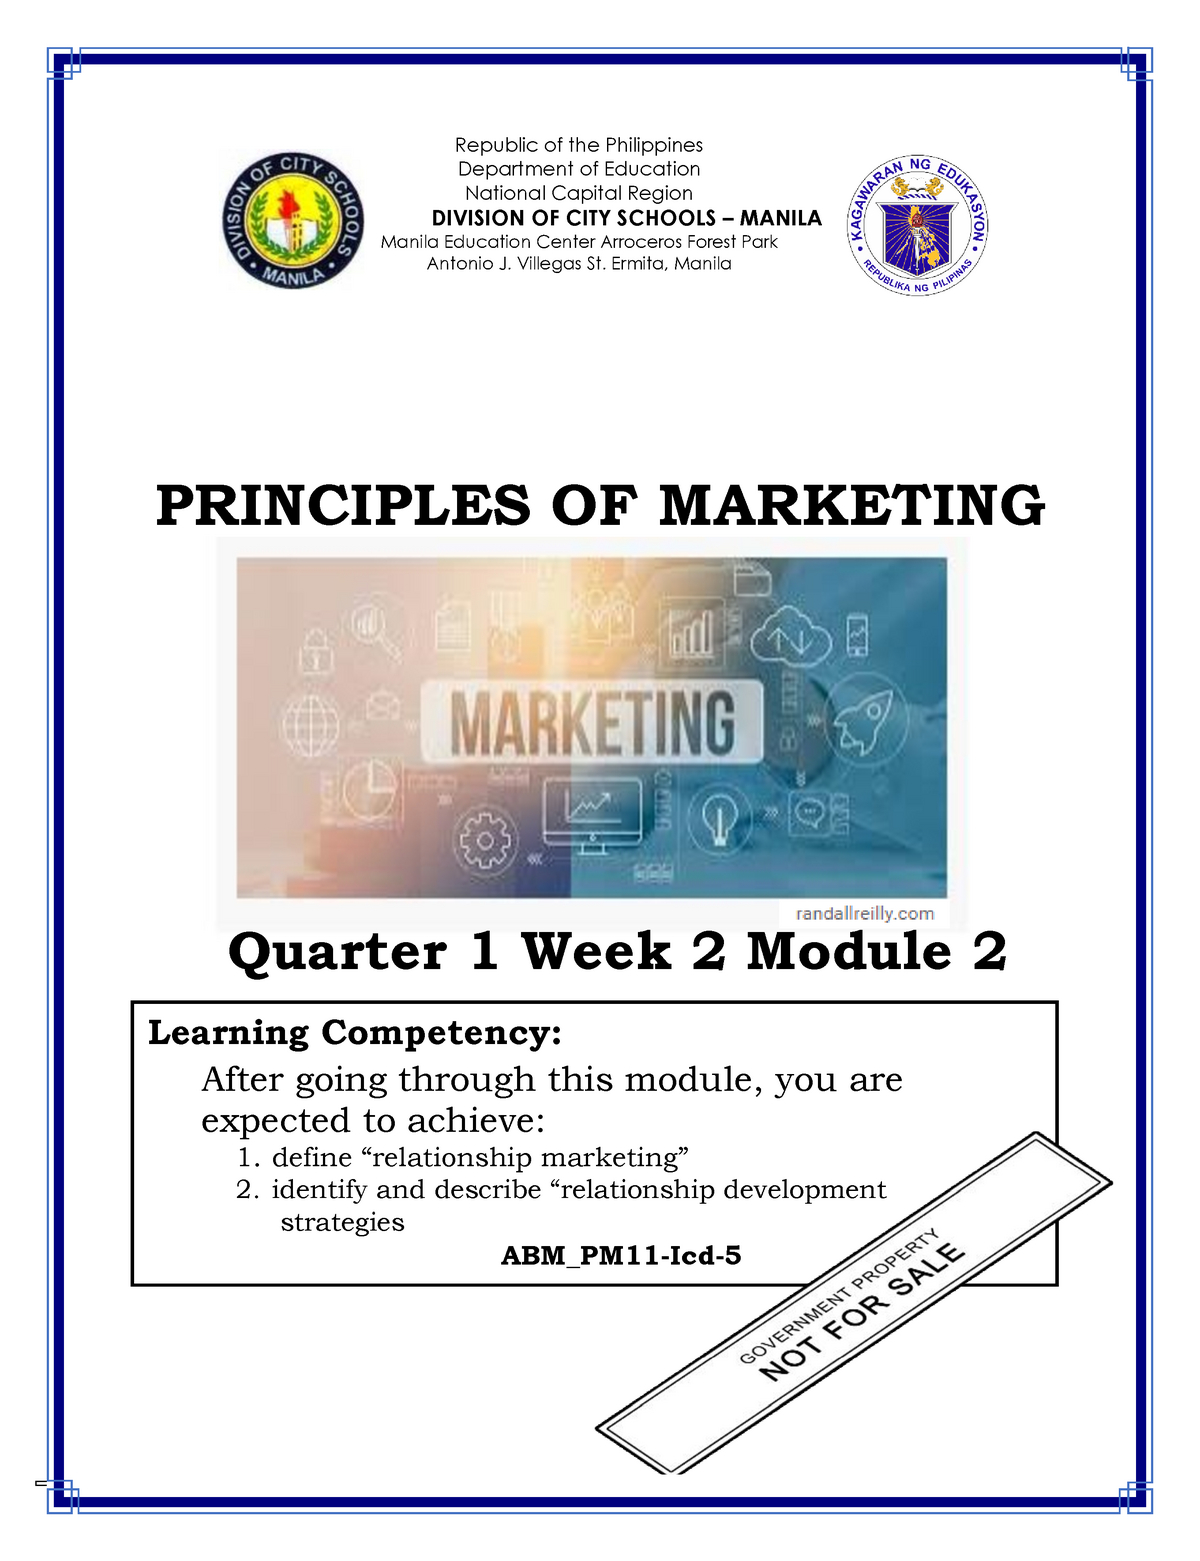 Principles of Marketing Marketing Quarter 1 Week-2 - Learning